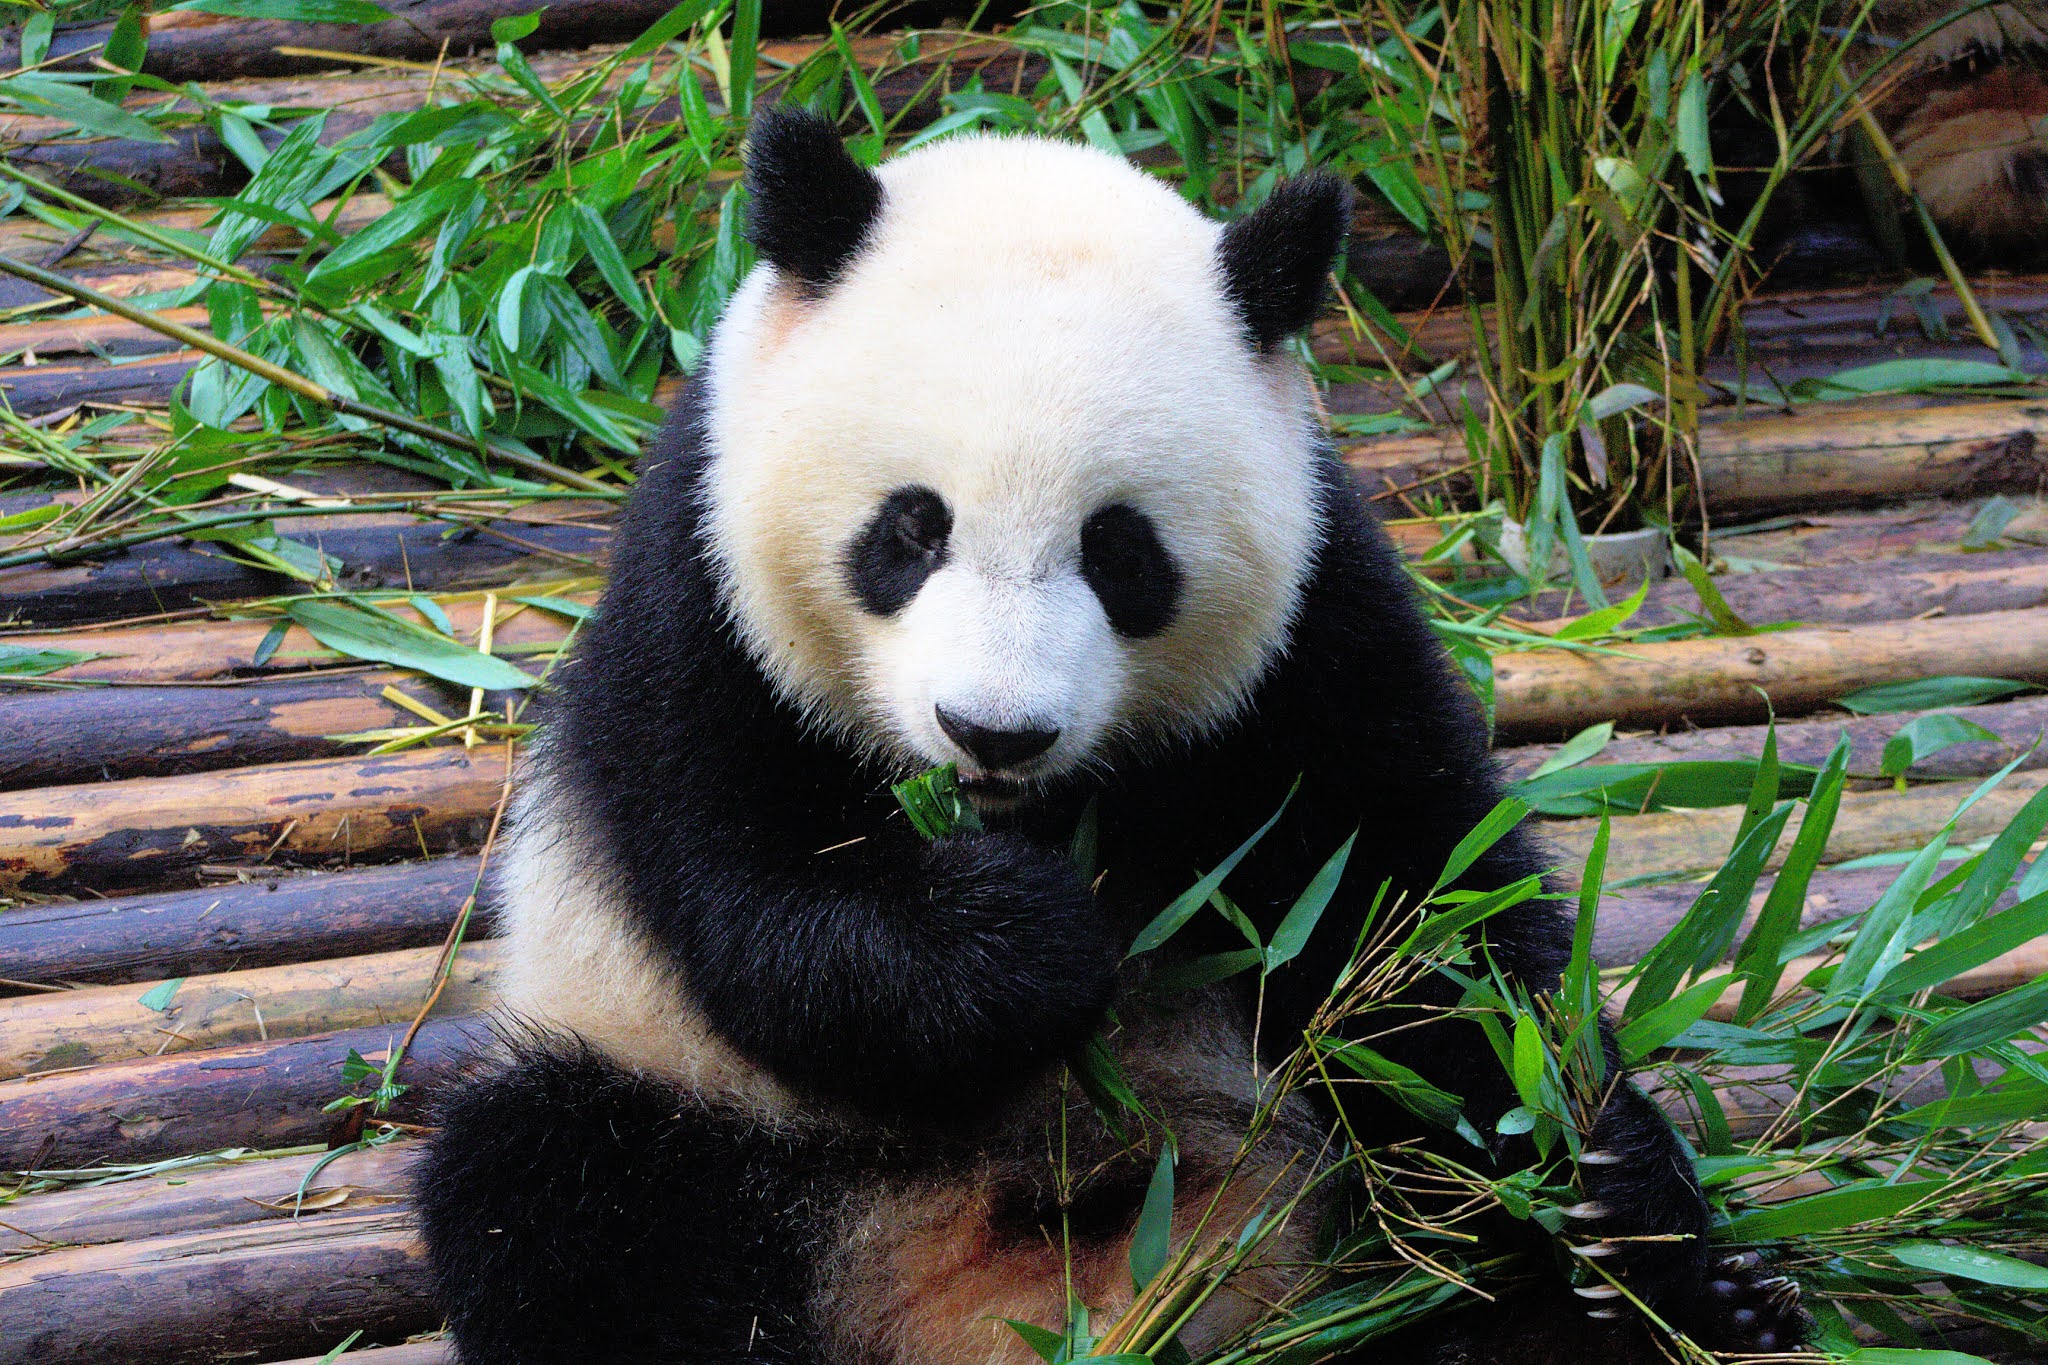 Панда без кругов. Панда привет. Панда без черных кругов. Привет от панды. Ailuropoda melanoleuca qinlingensis.